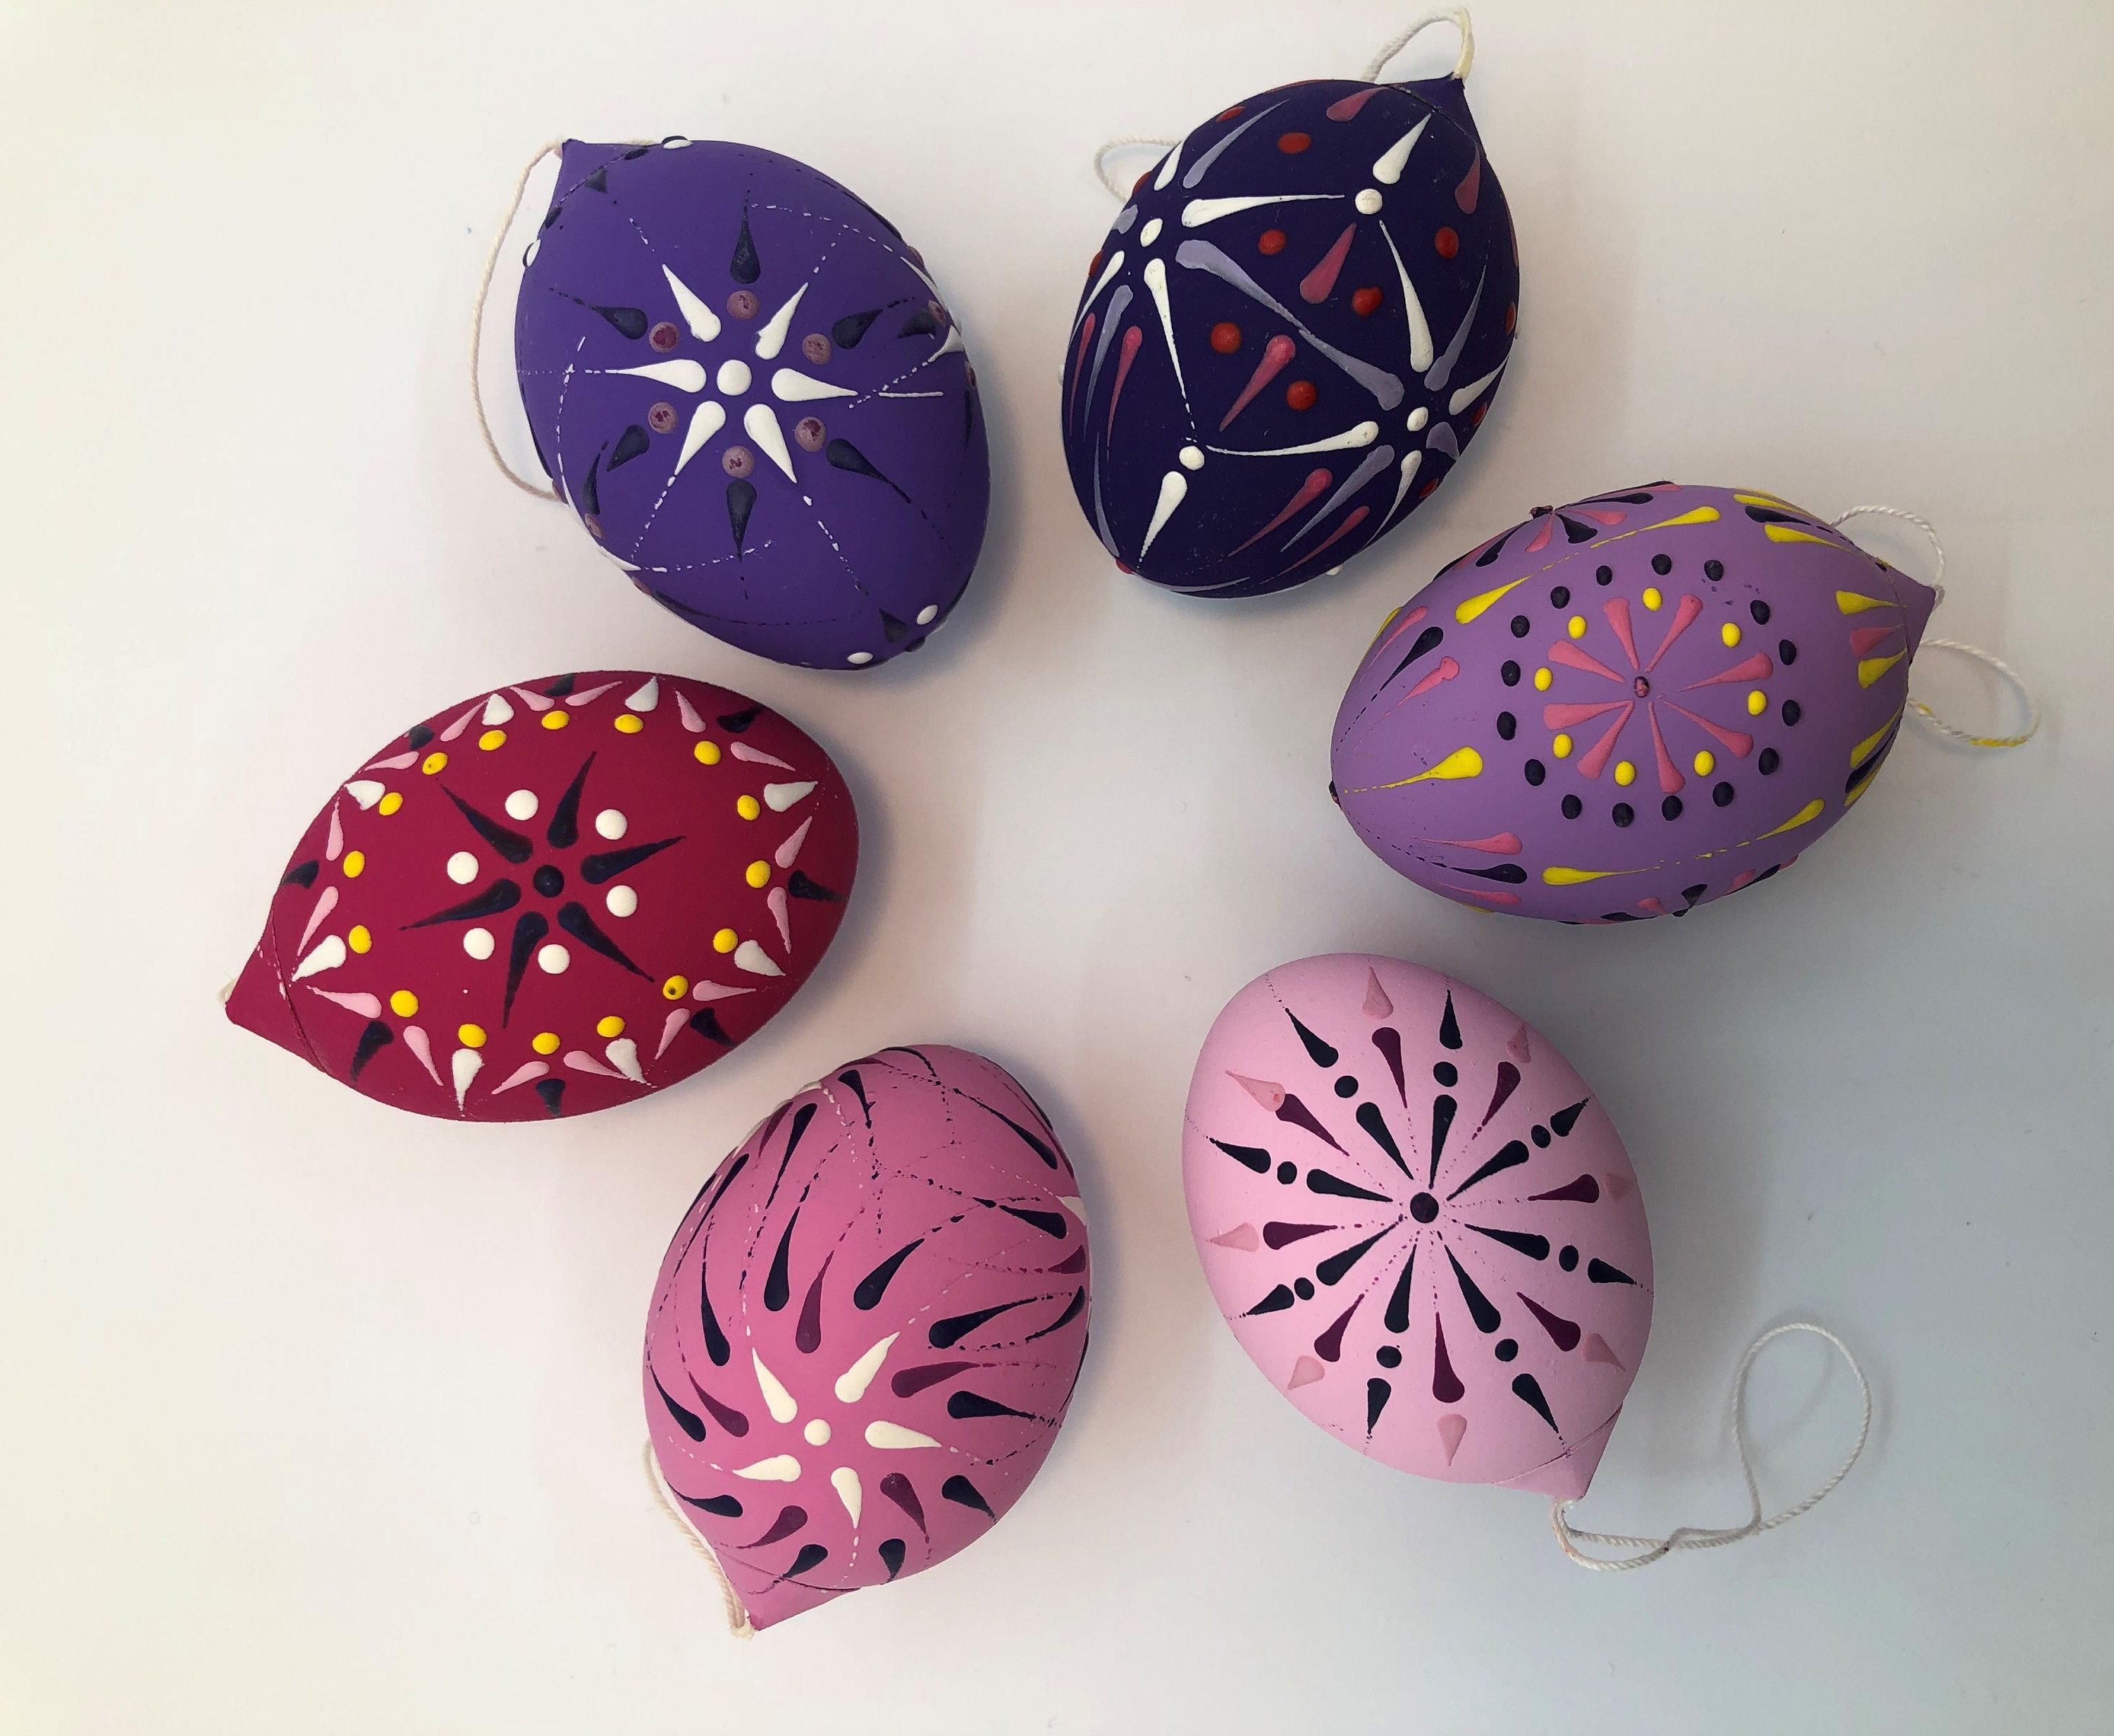 Purple Hues and Me: Plaster Cloth Egg Vase DIY